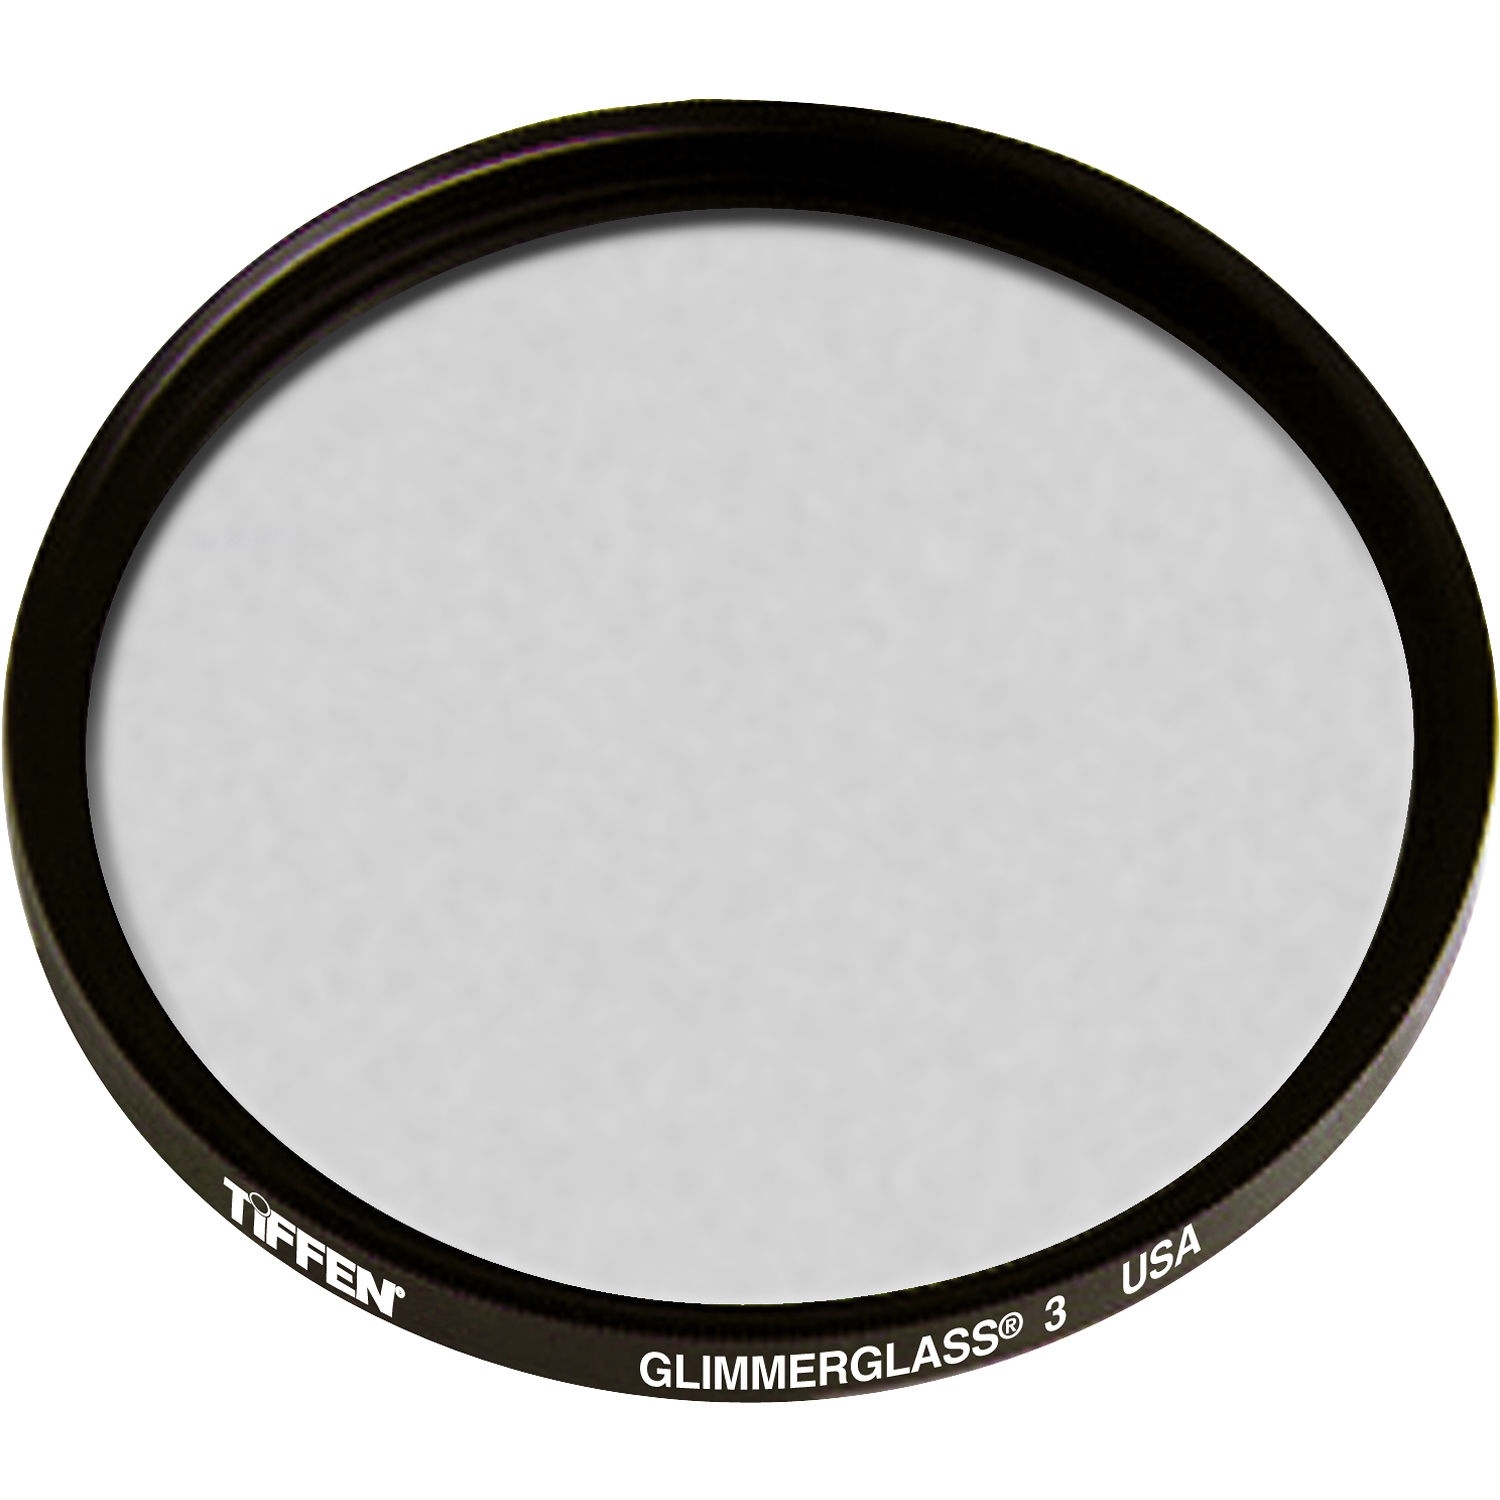 Tiffen 49mm Glimmerglass 3 Filter